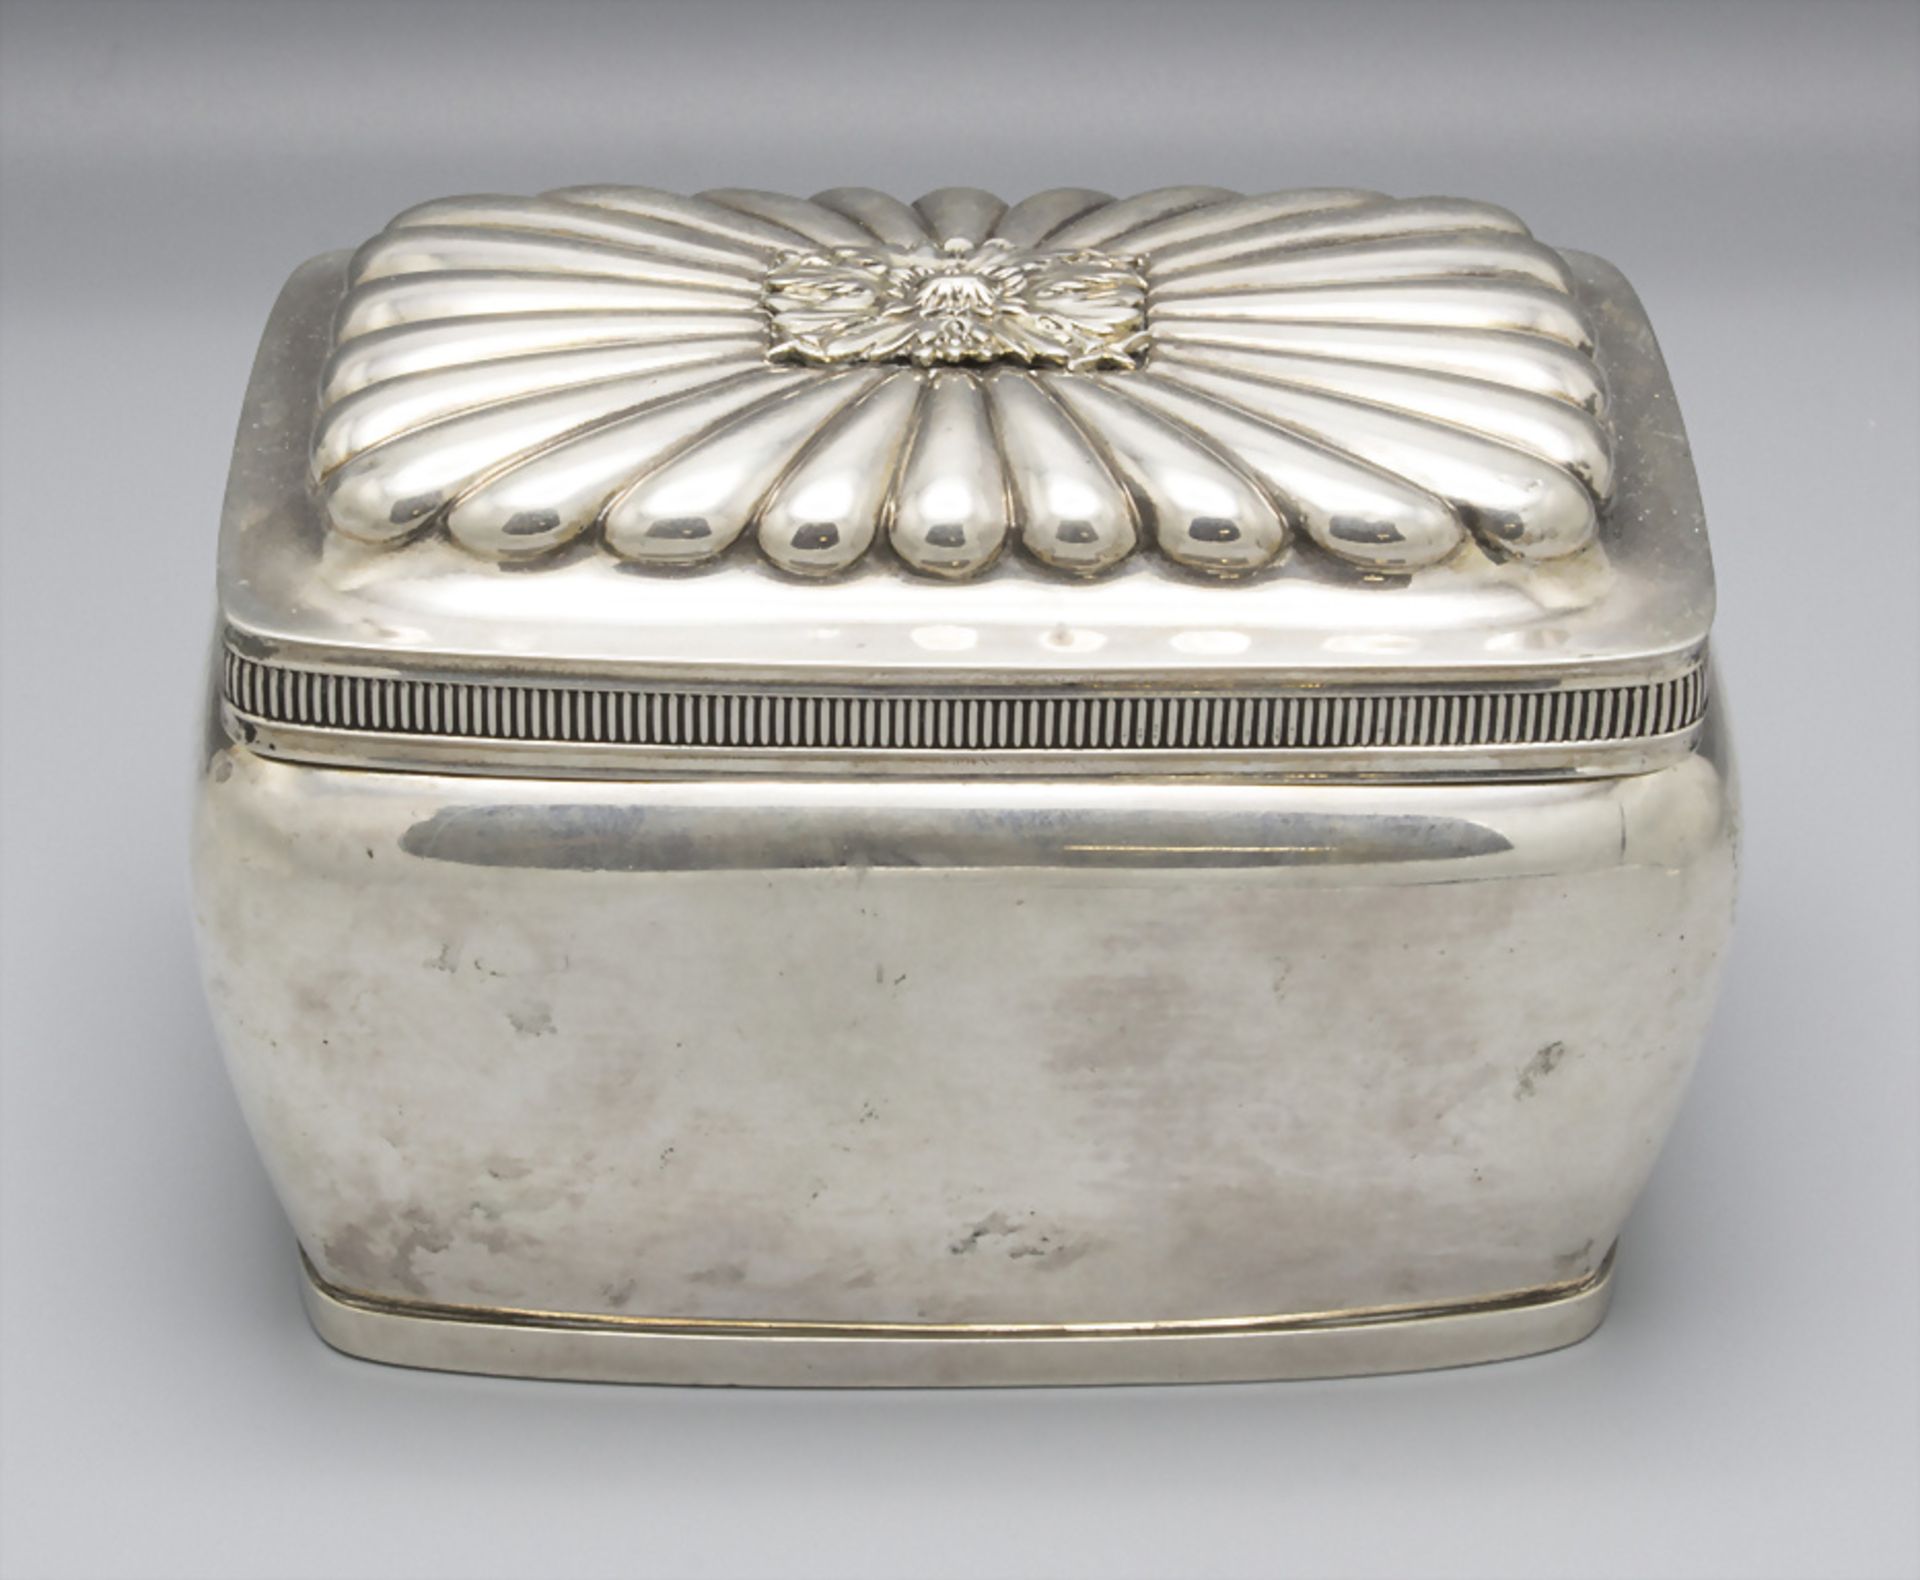 Deckeldose / A covered silver bowl, Hessels, Breda, 1835